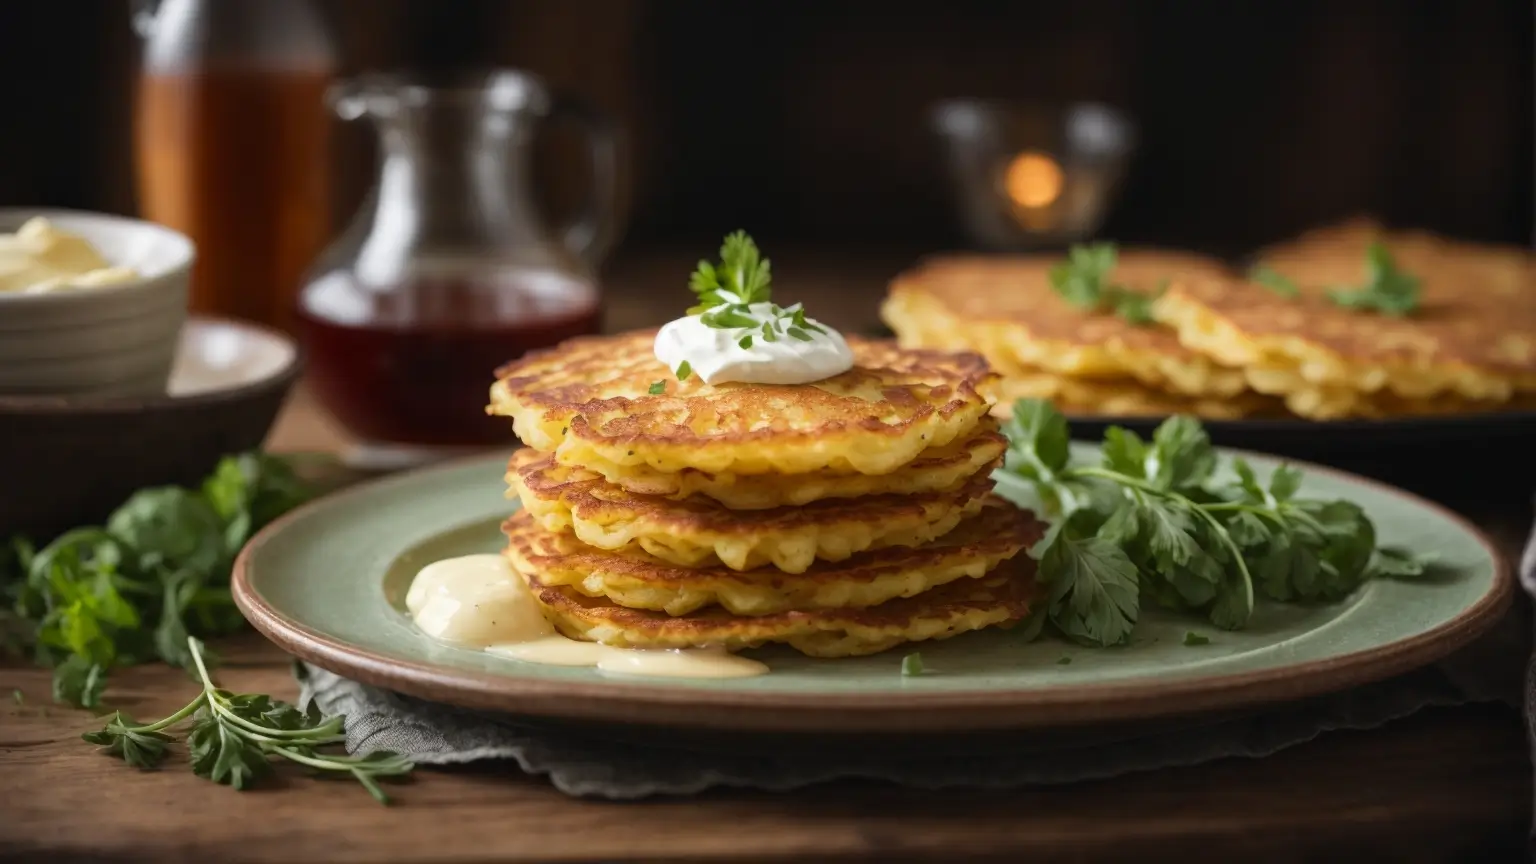 German Potato Pancakes Recipe